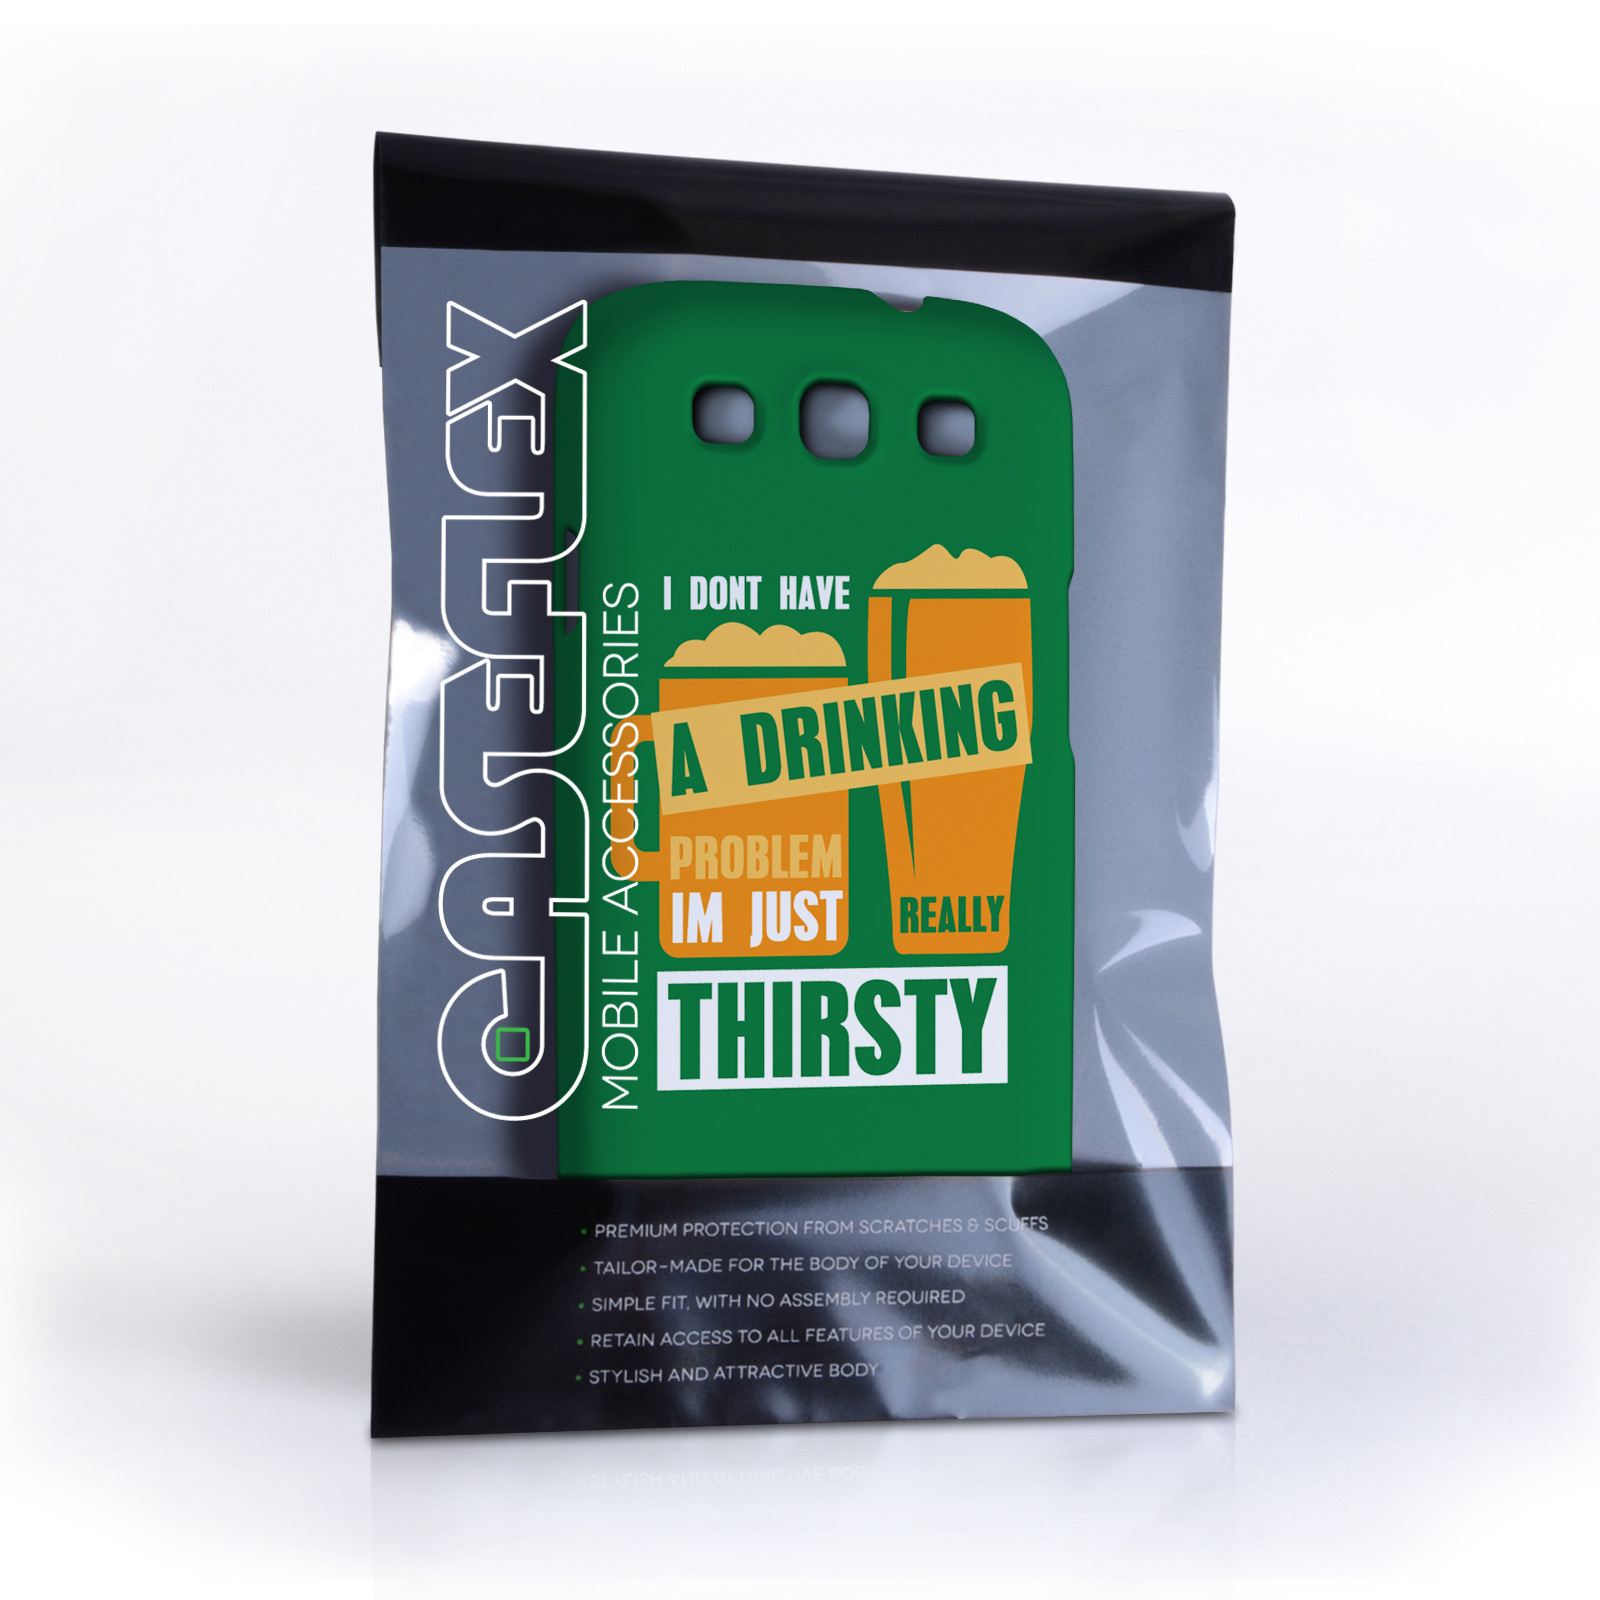 Caseflex Samsung Galaxy S3 ‘Really Thirsty’ Quote Hard Case – Green